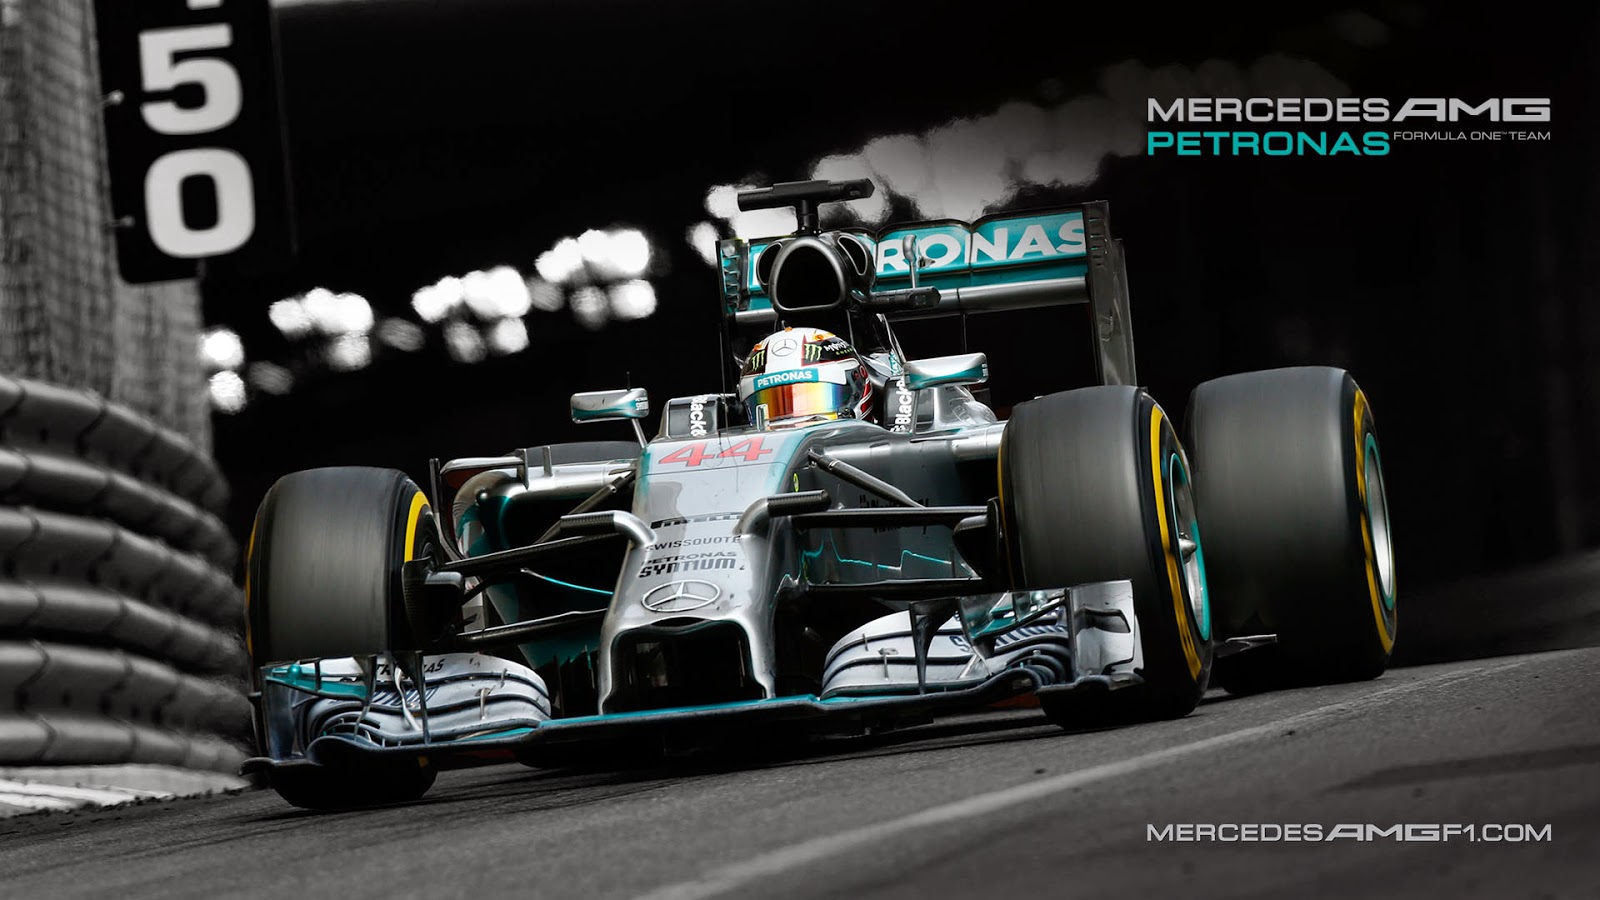 Mercedes AMG Petronas W05 2014 F1 Wallpaper KFZoom 1600x900